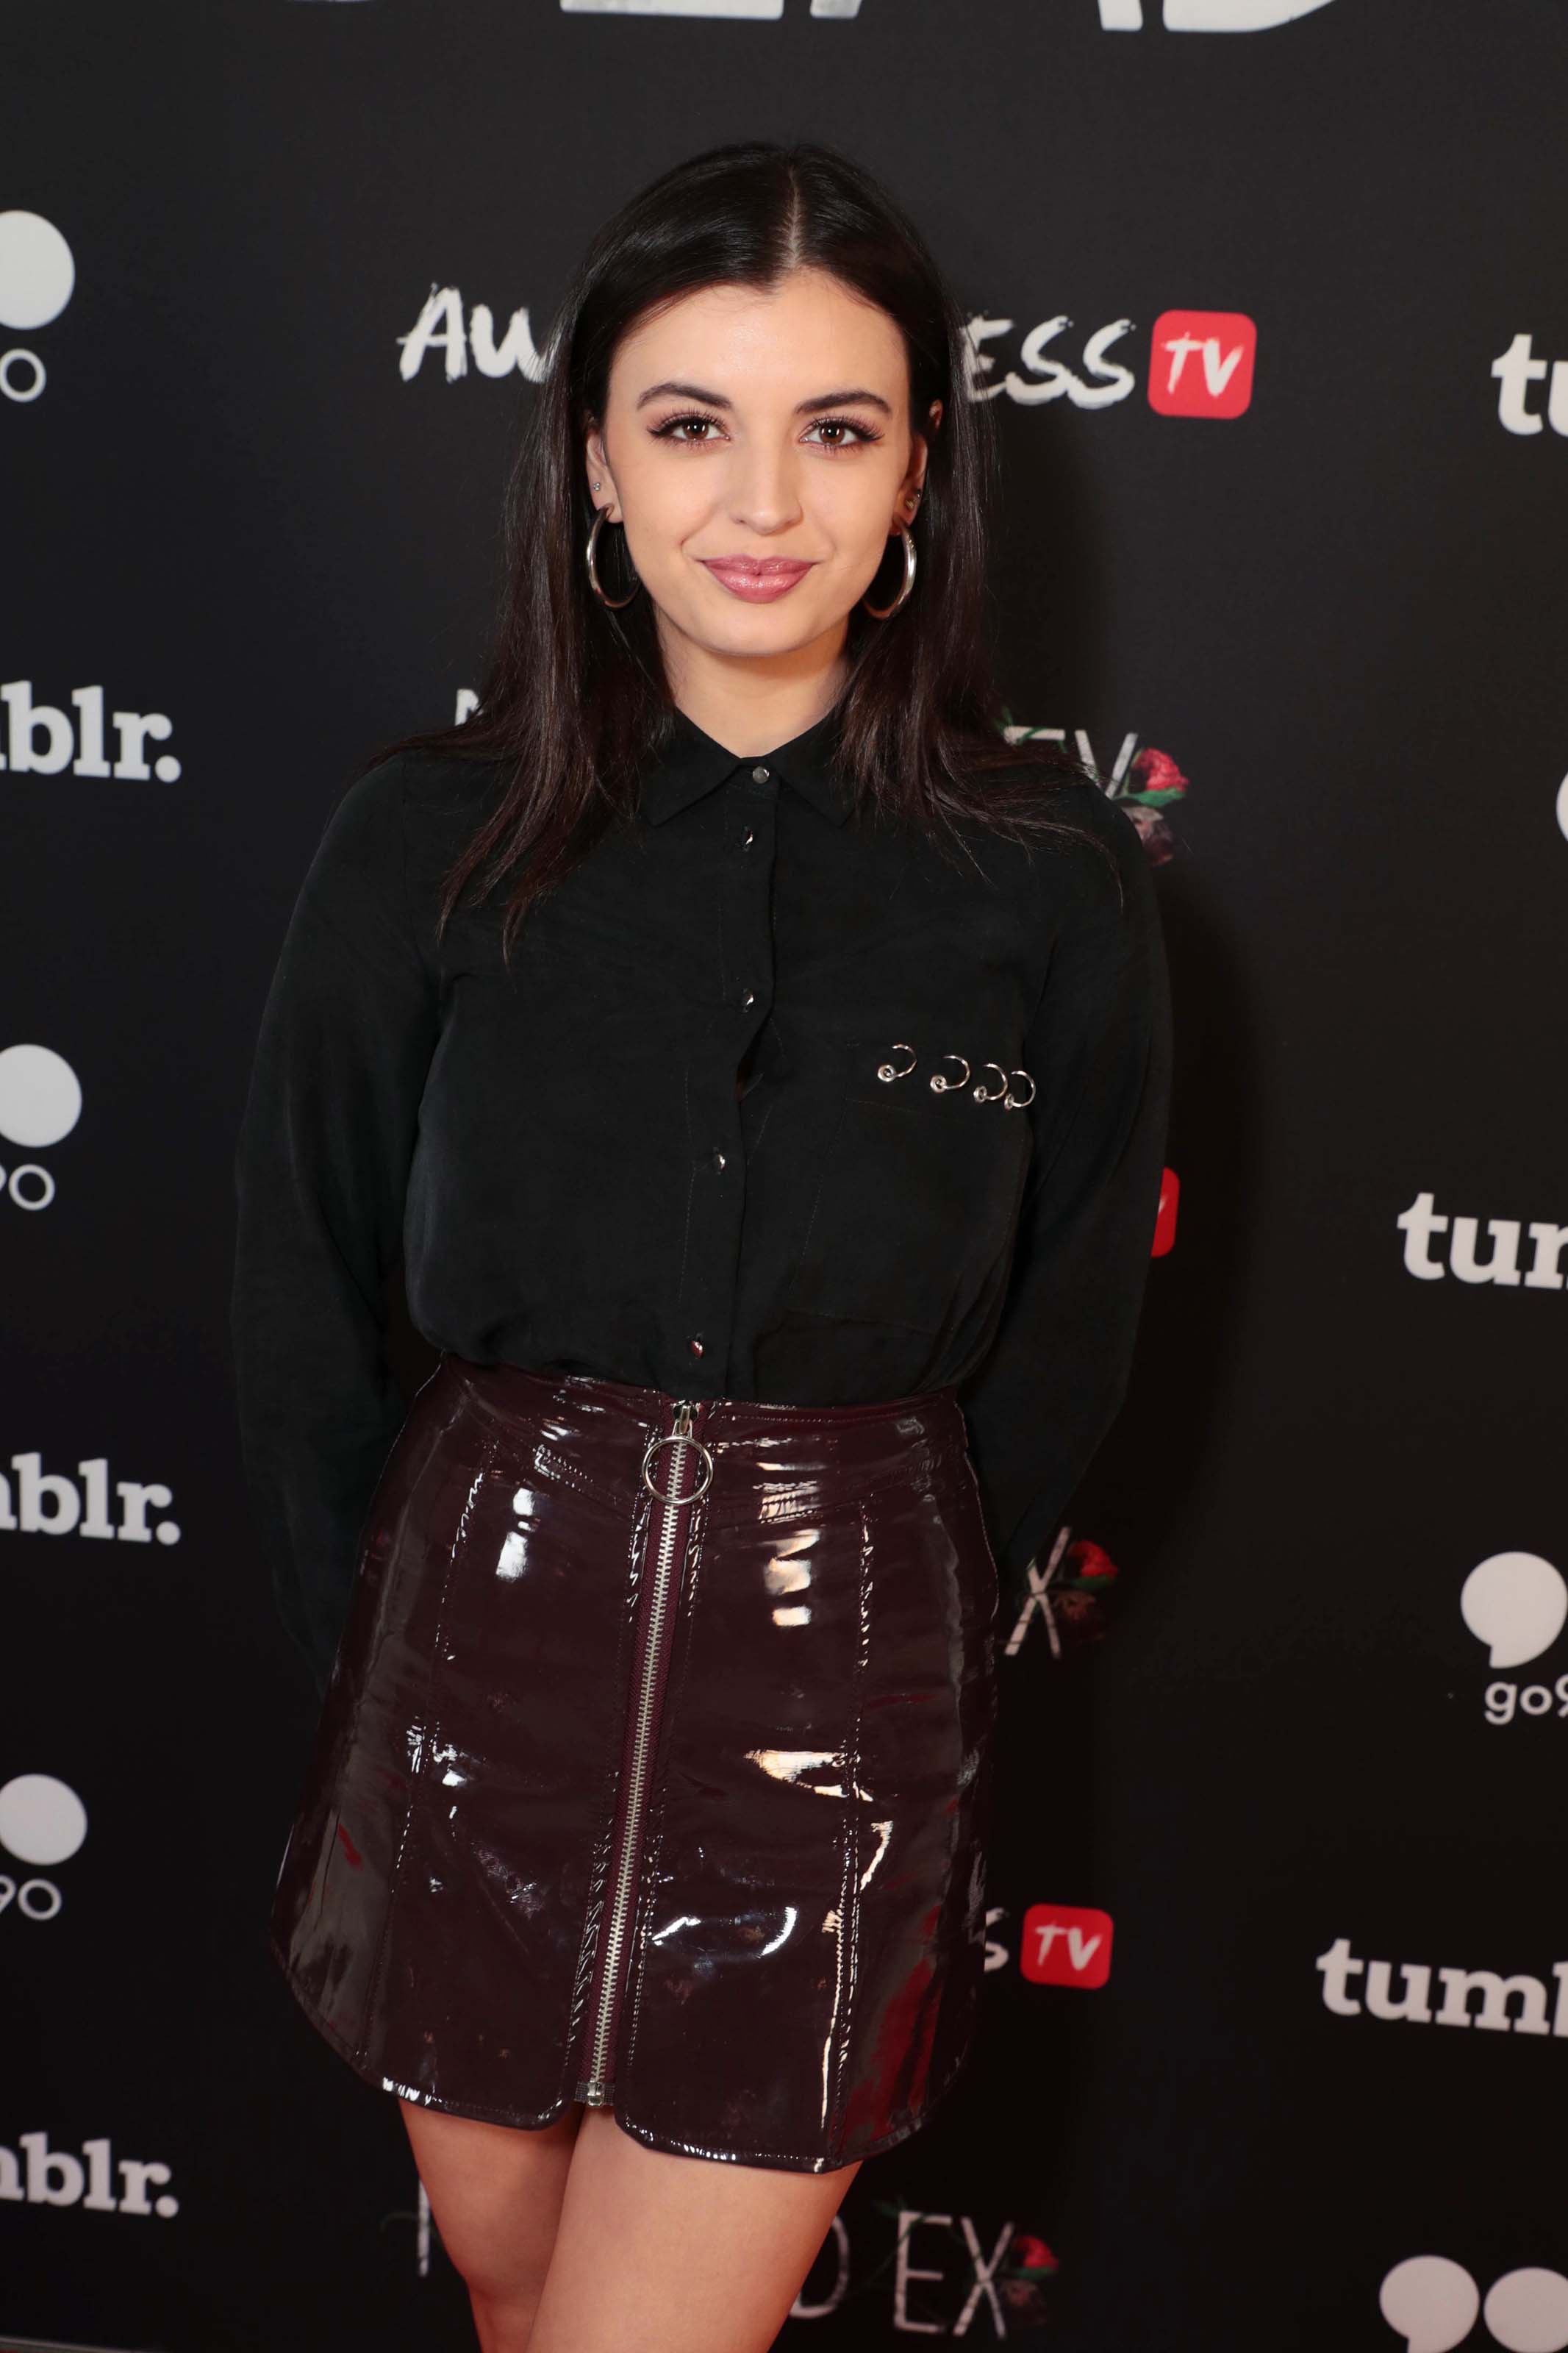 Rebecca Black attends Premiere of AwesomenessTV’s ‘My Dead Ex’